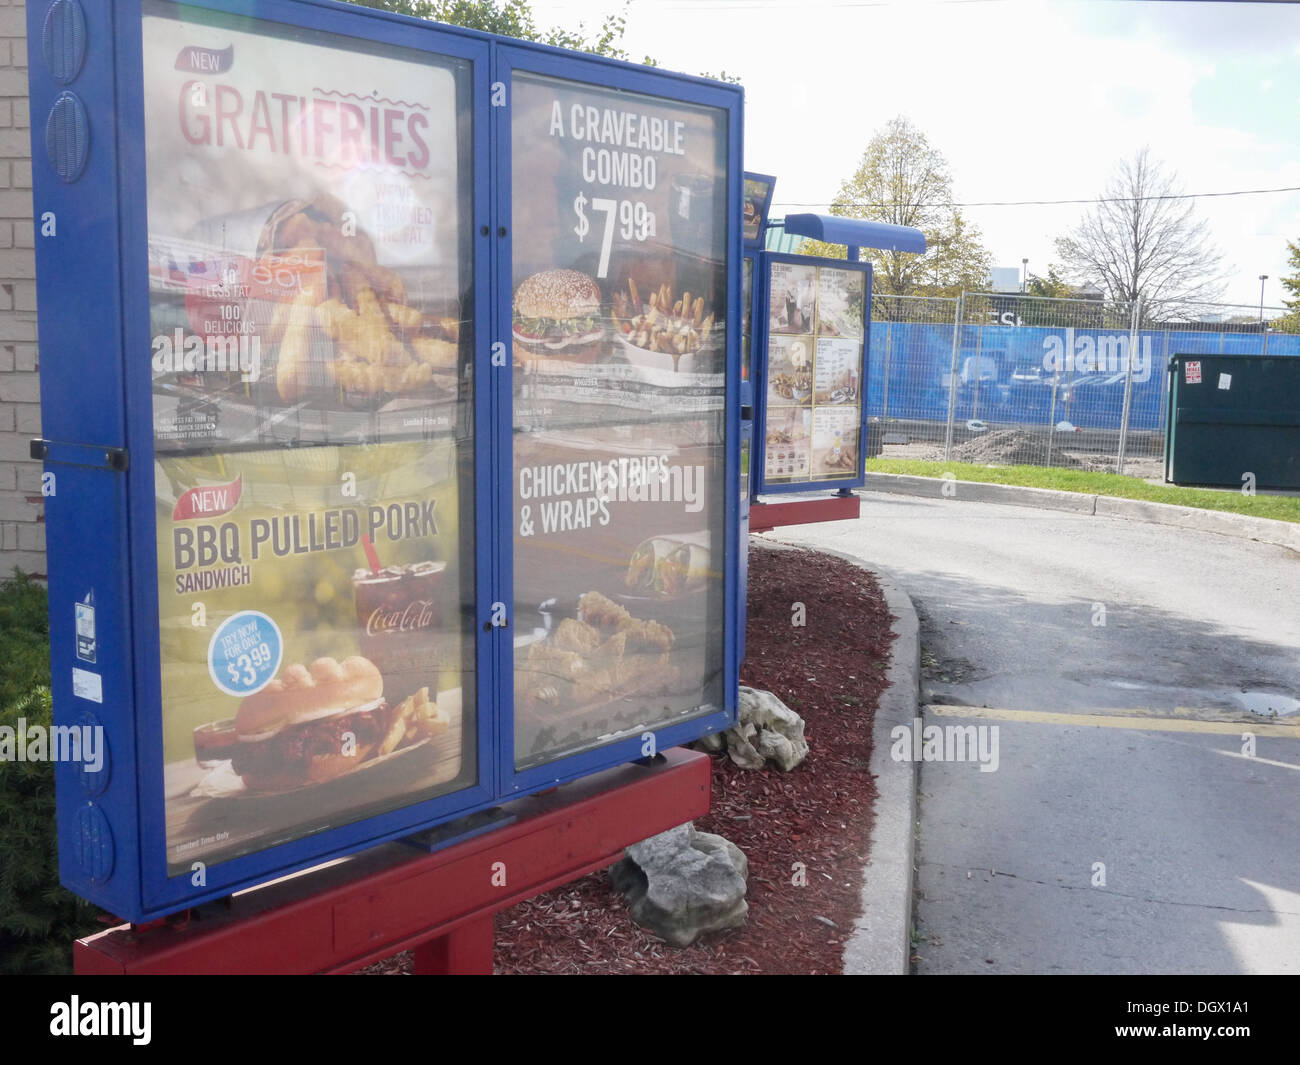 burger king outdoor advertisement Stock Photo